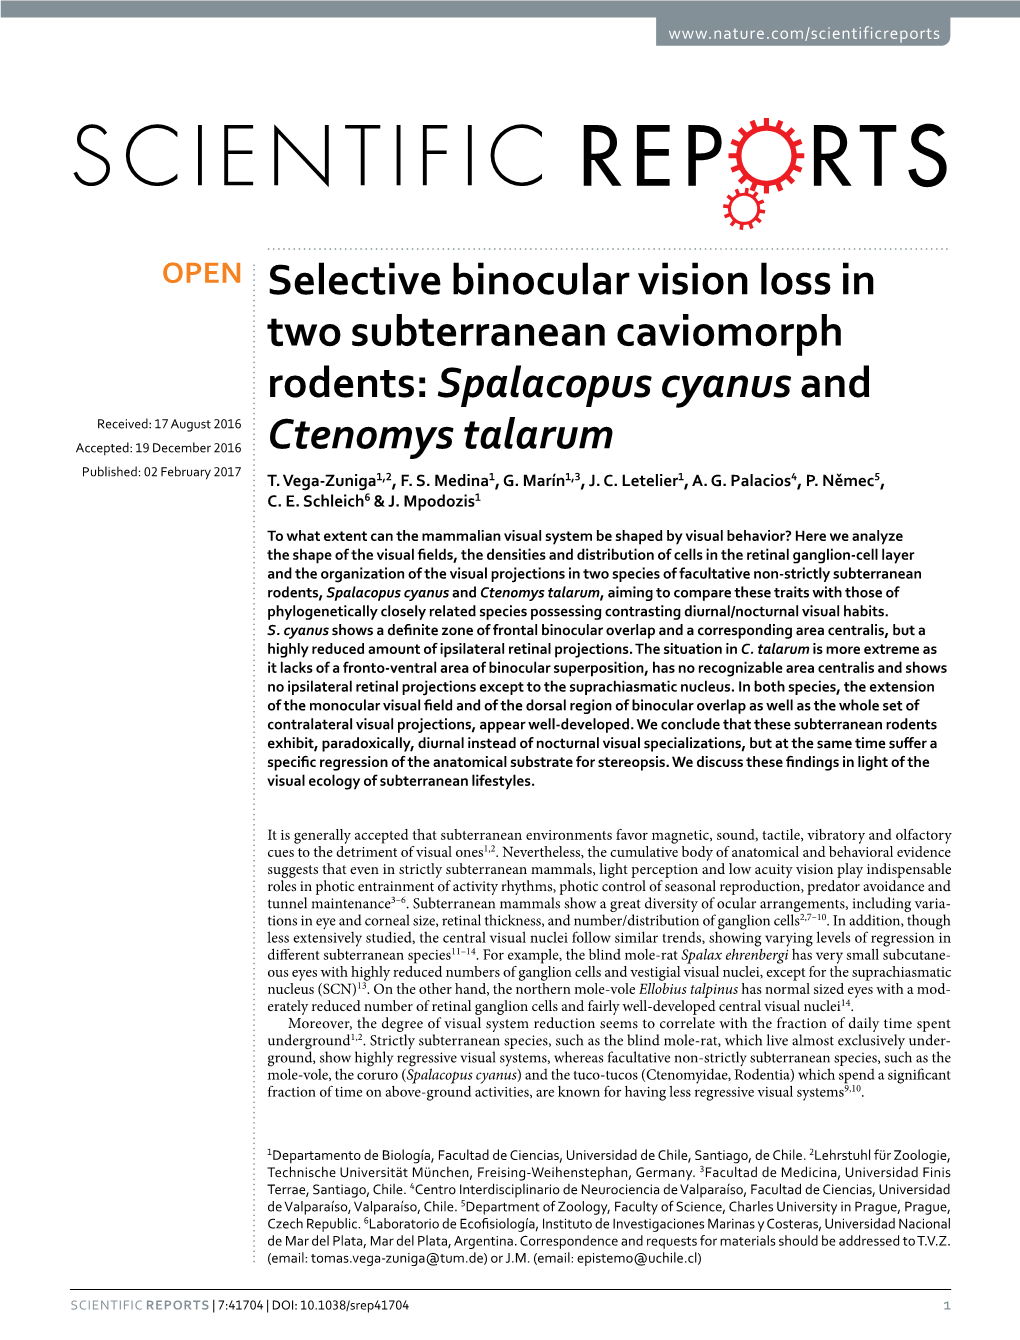 Selective Binocular Vision Loss in Two Subterranean Caviomorph Rodents